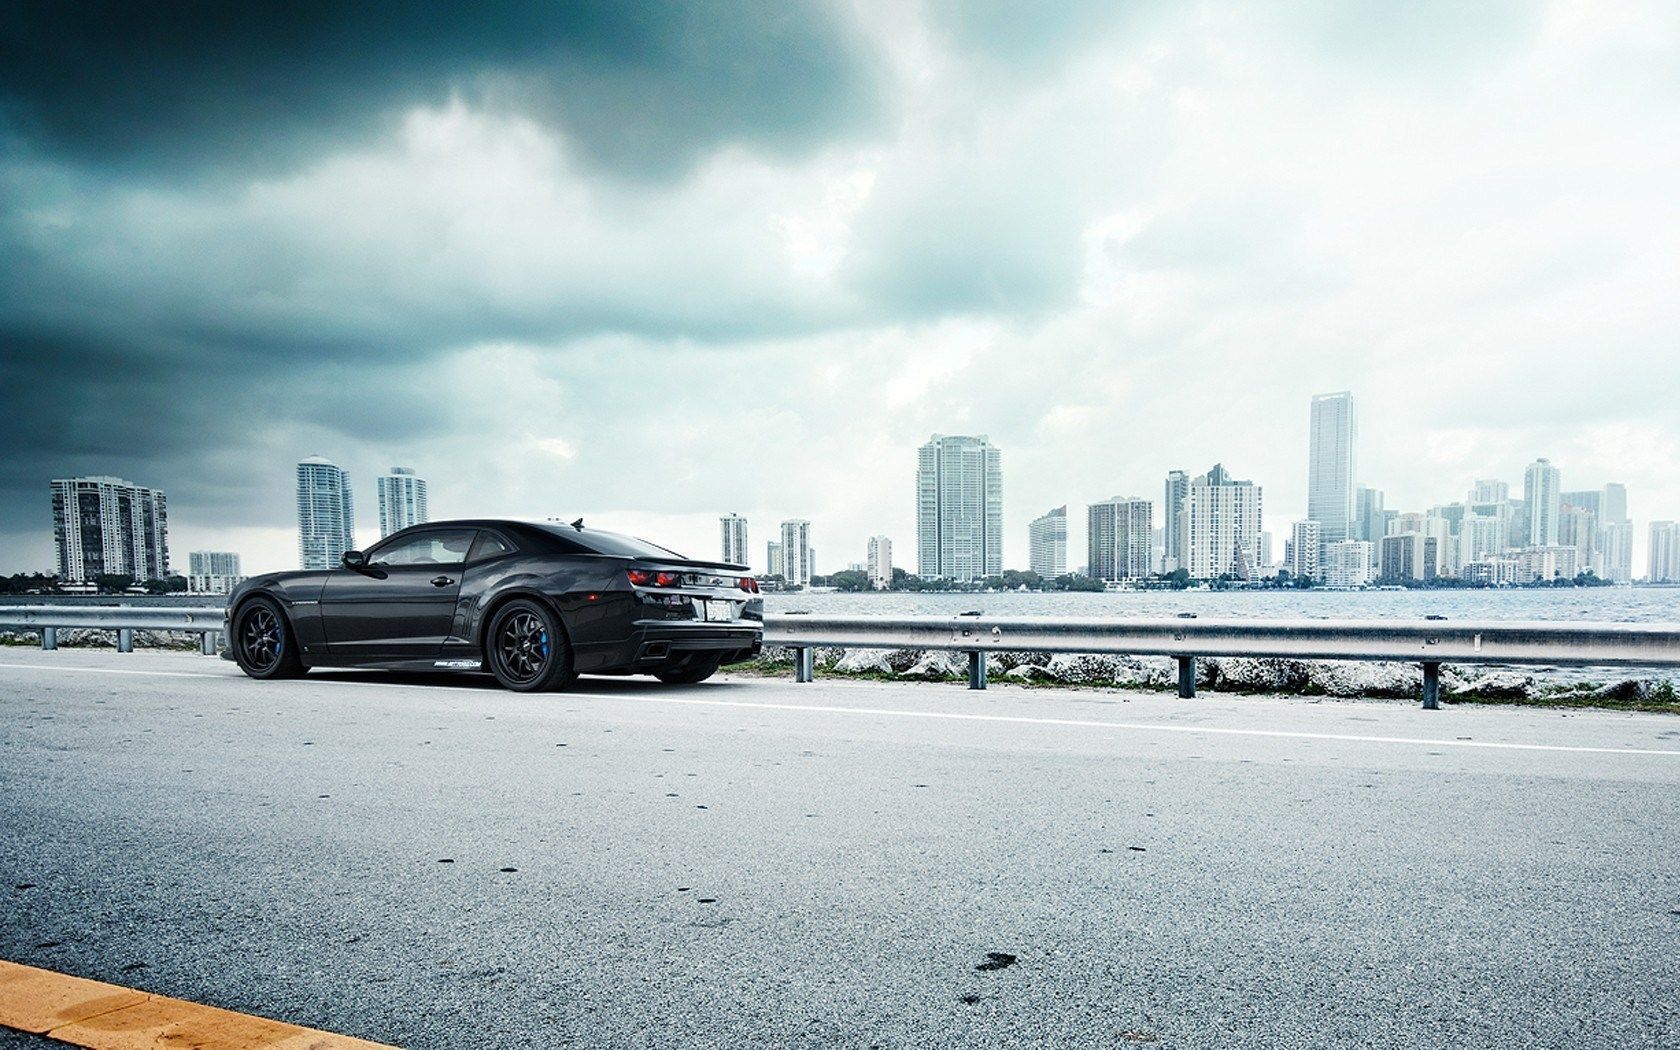 Camaro, Black Car, Street, City, Buildings, HD Wallpaper - HD ...